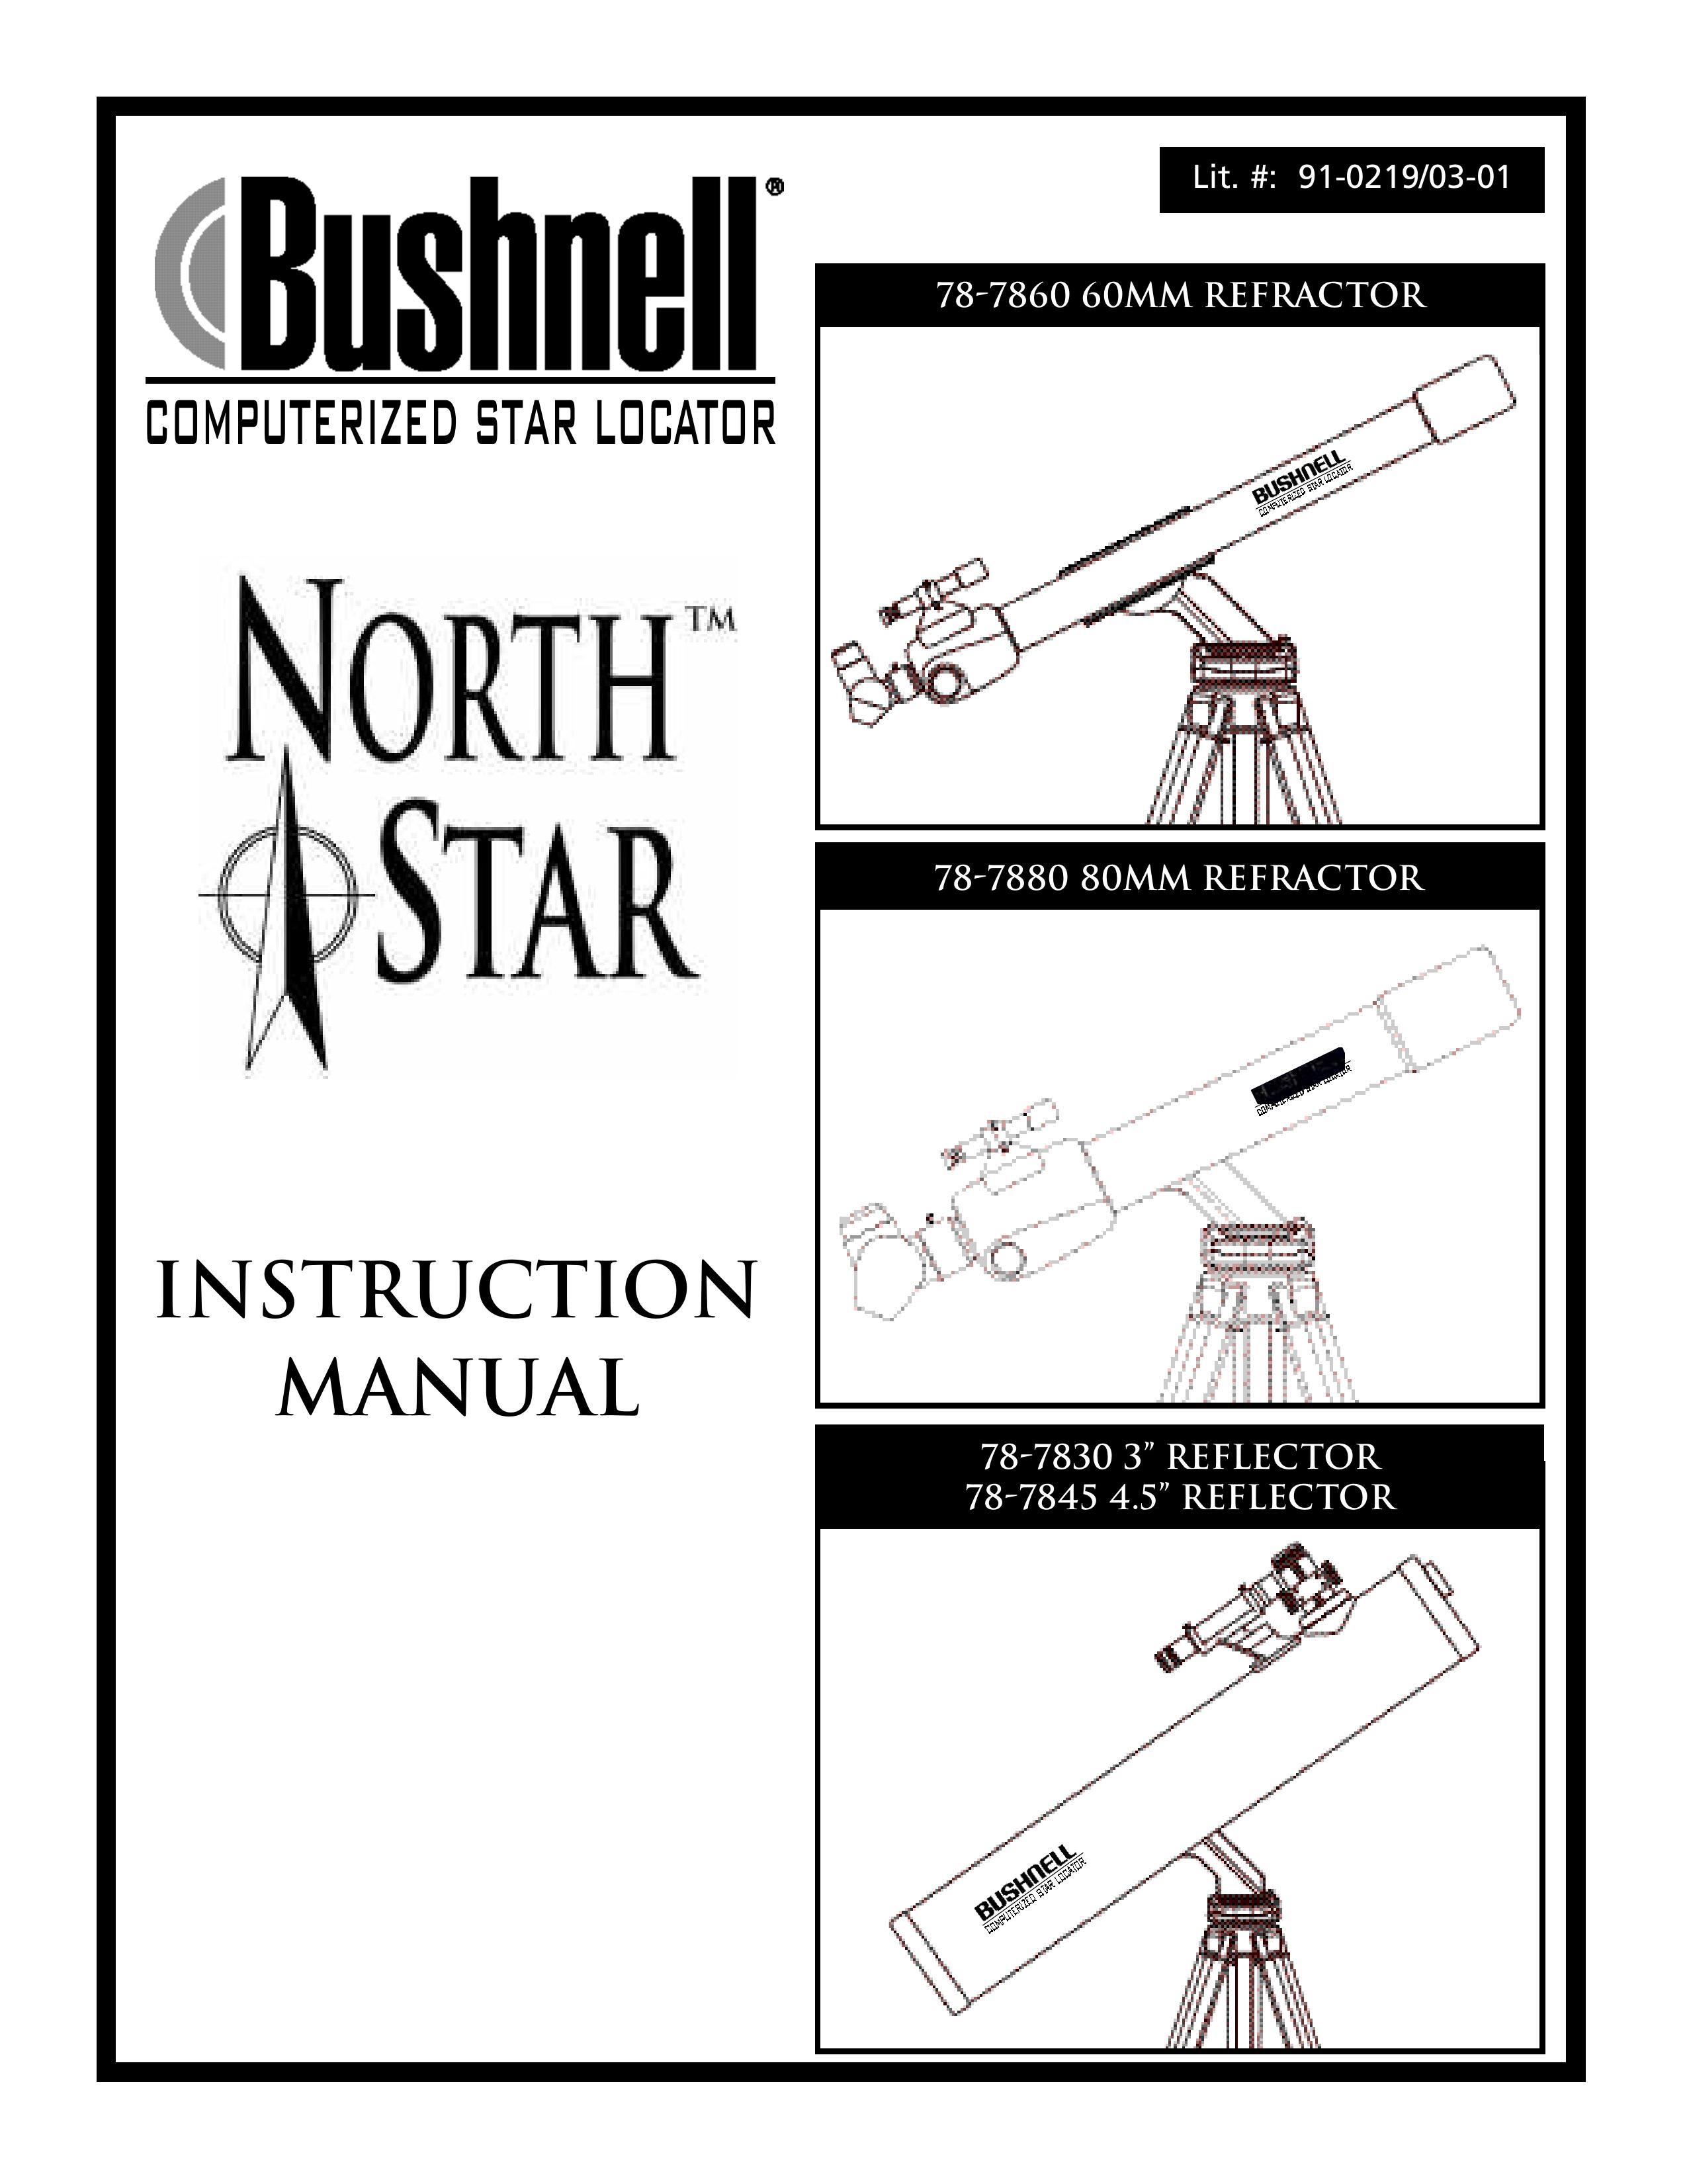 Bushnell 78-7830 3 REFLECTOR Telescope User Manual